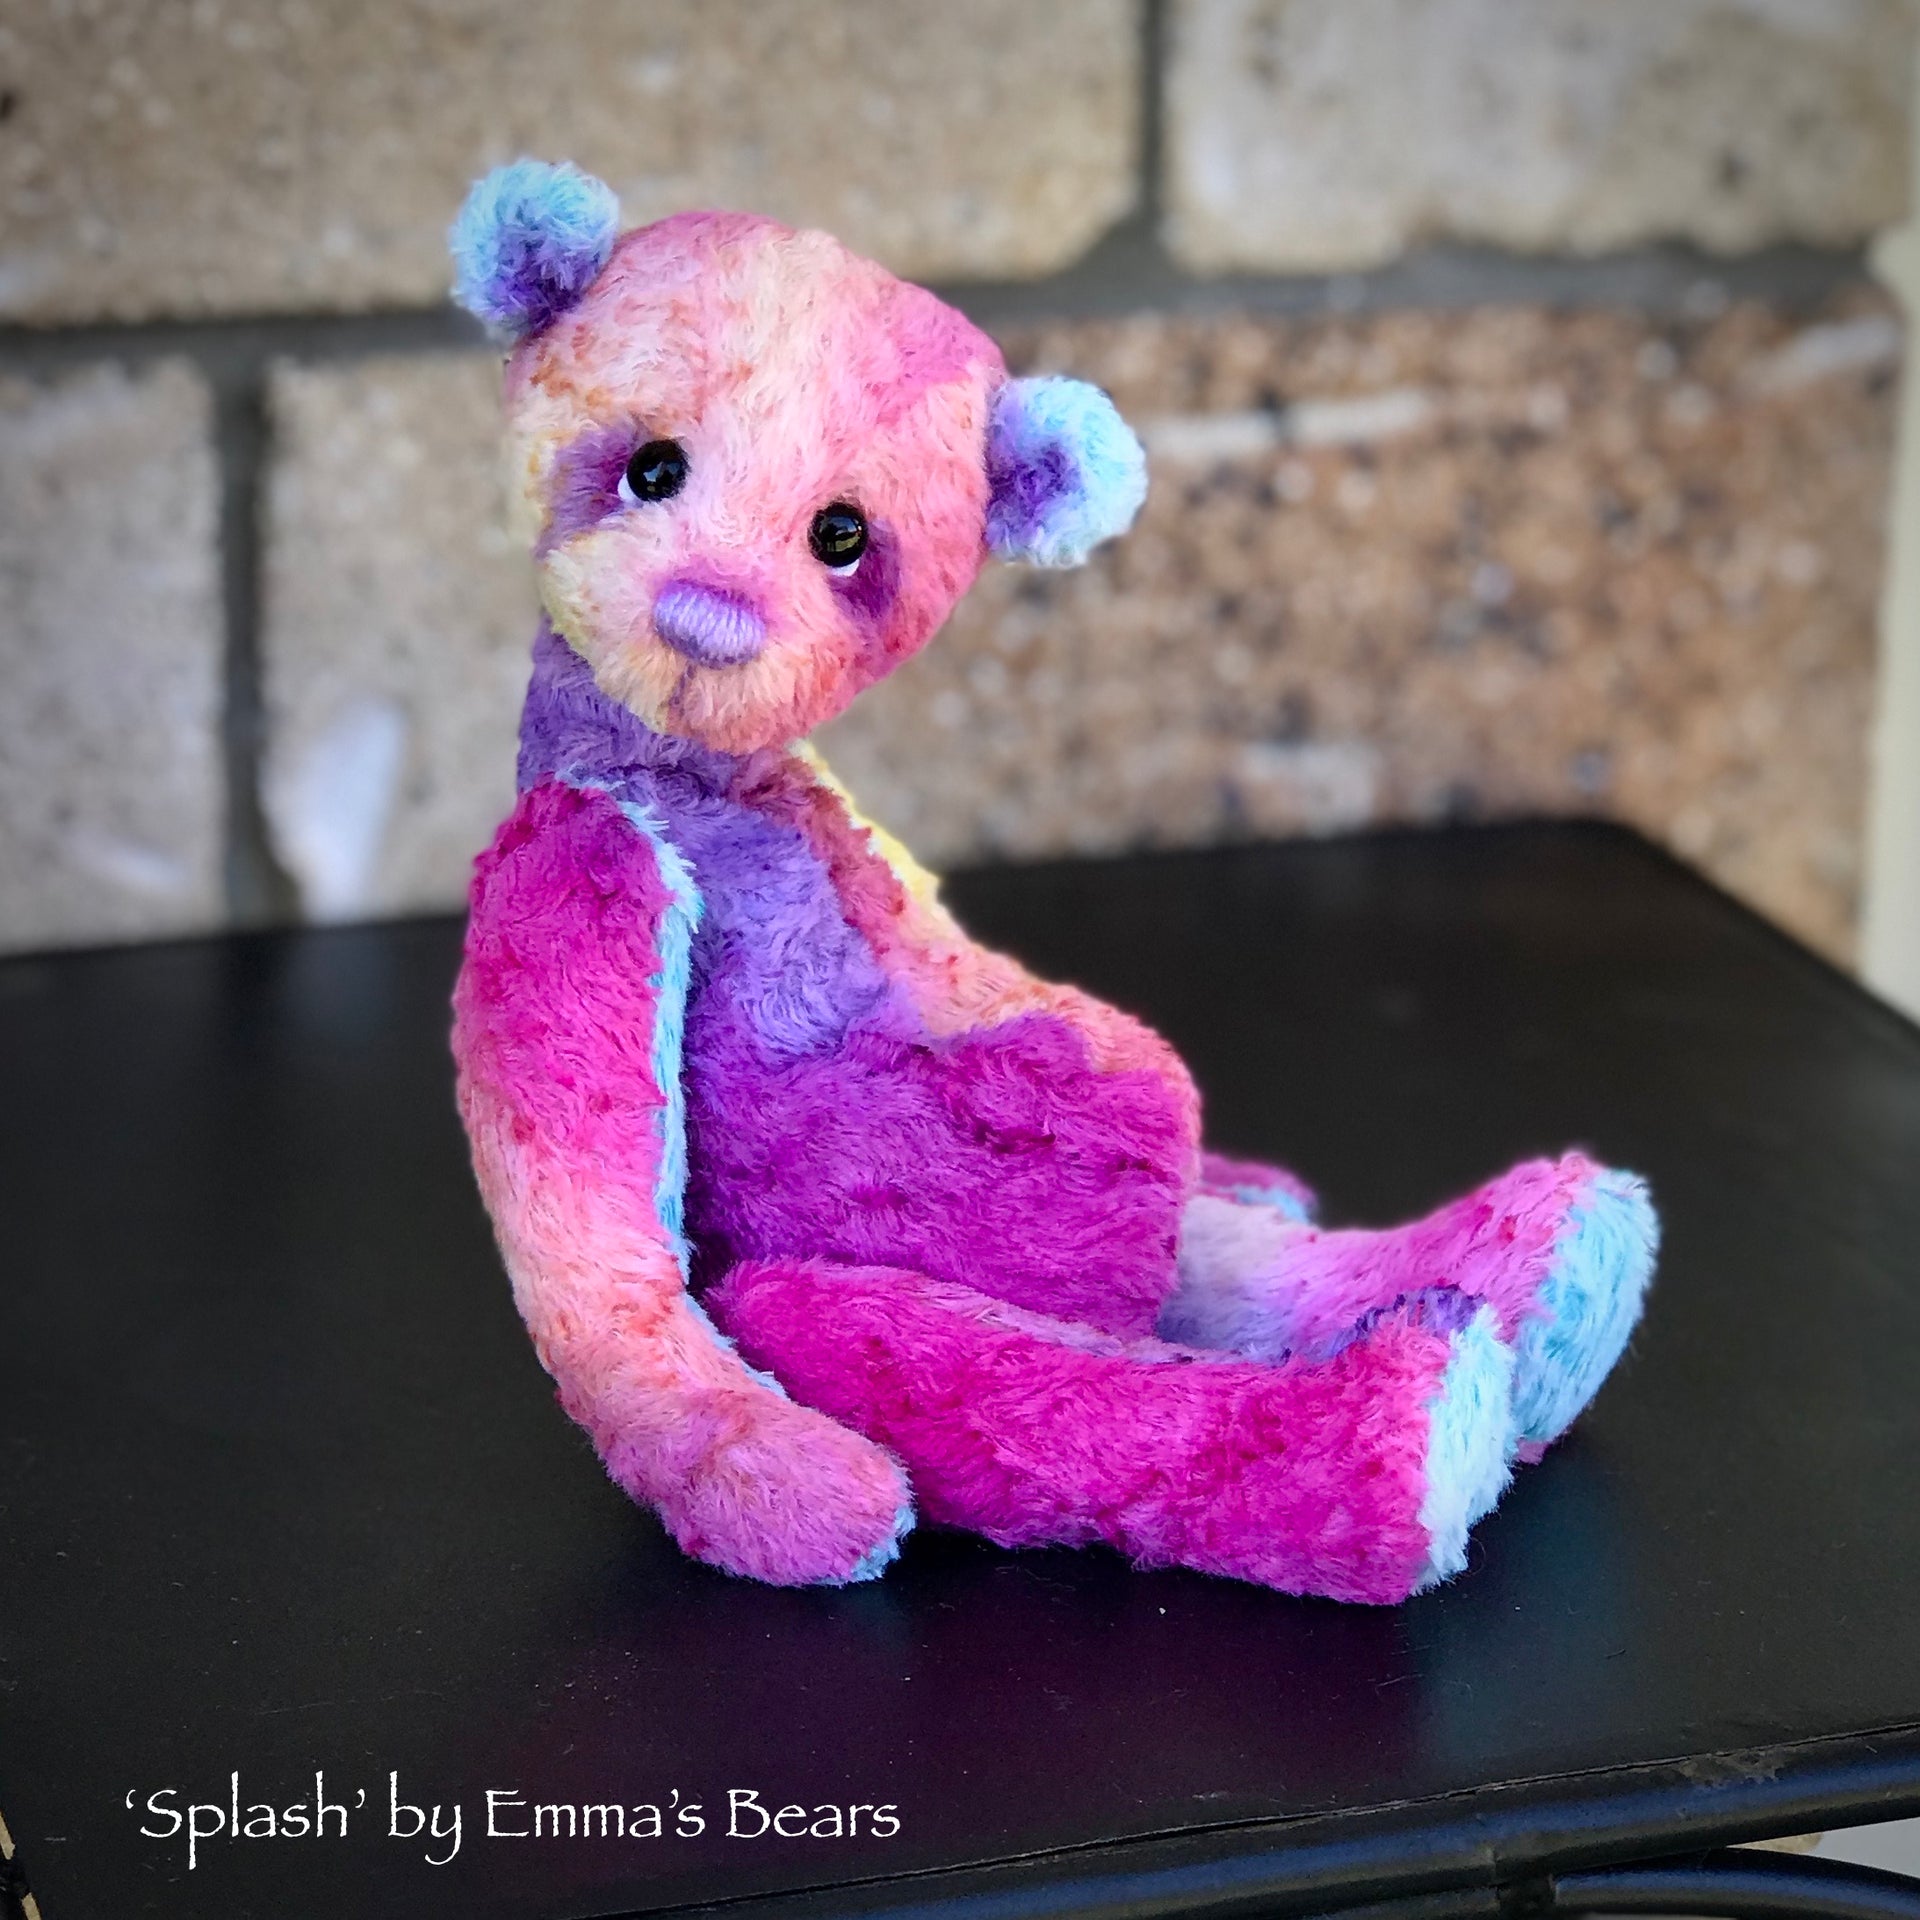 Splash - 8" Hand-Dyed Viscose Artist Bear by Emma's Bears - OOAK